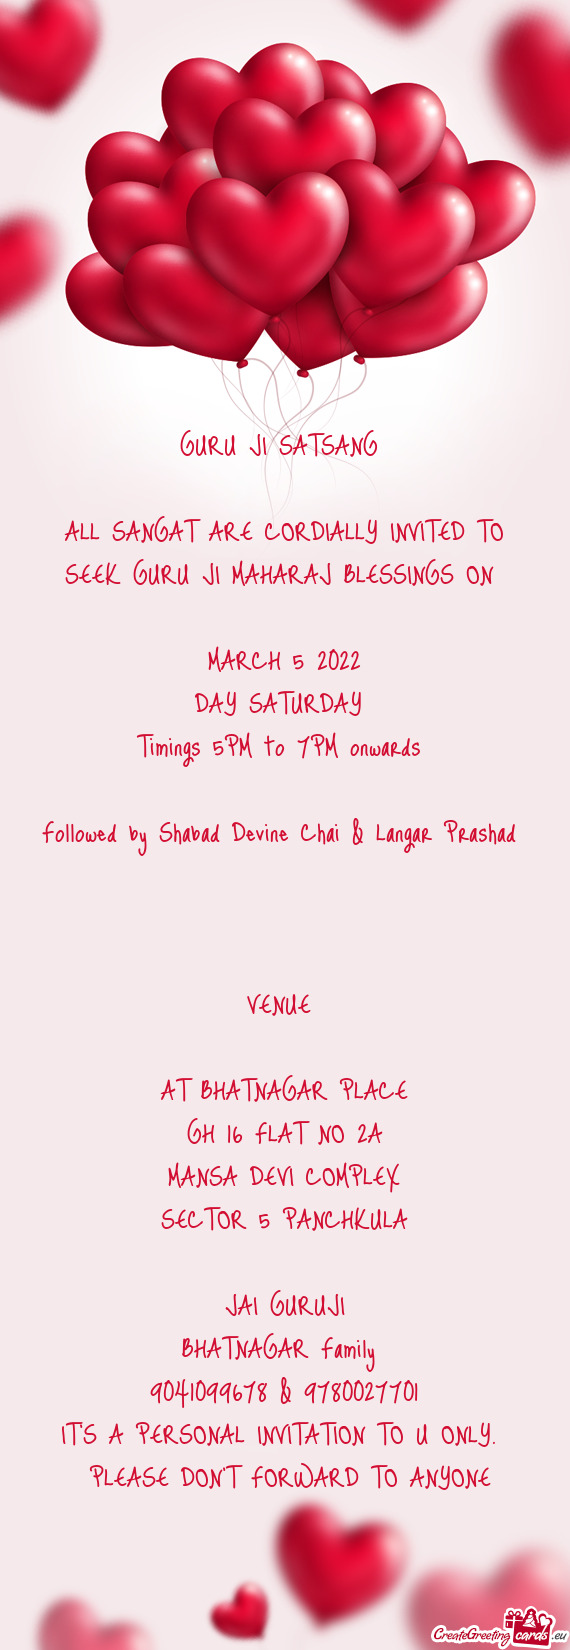 ALL SANGAT ARE CORDIALLY INVITED TO SEEK GURU JI MAHARAJ BLESSINGS ON